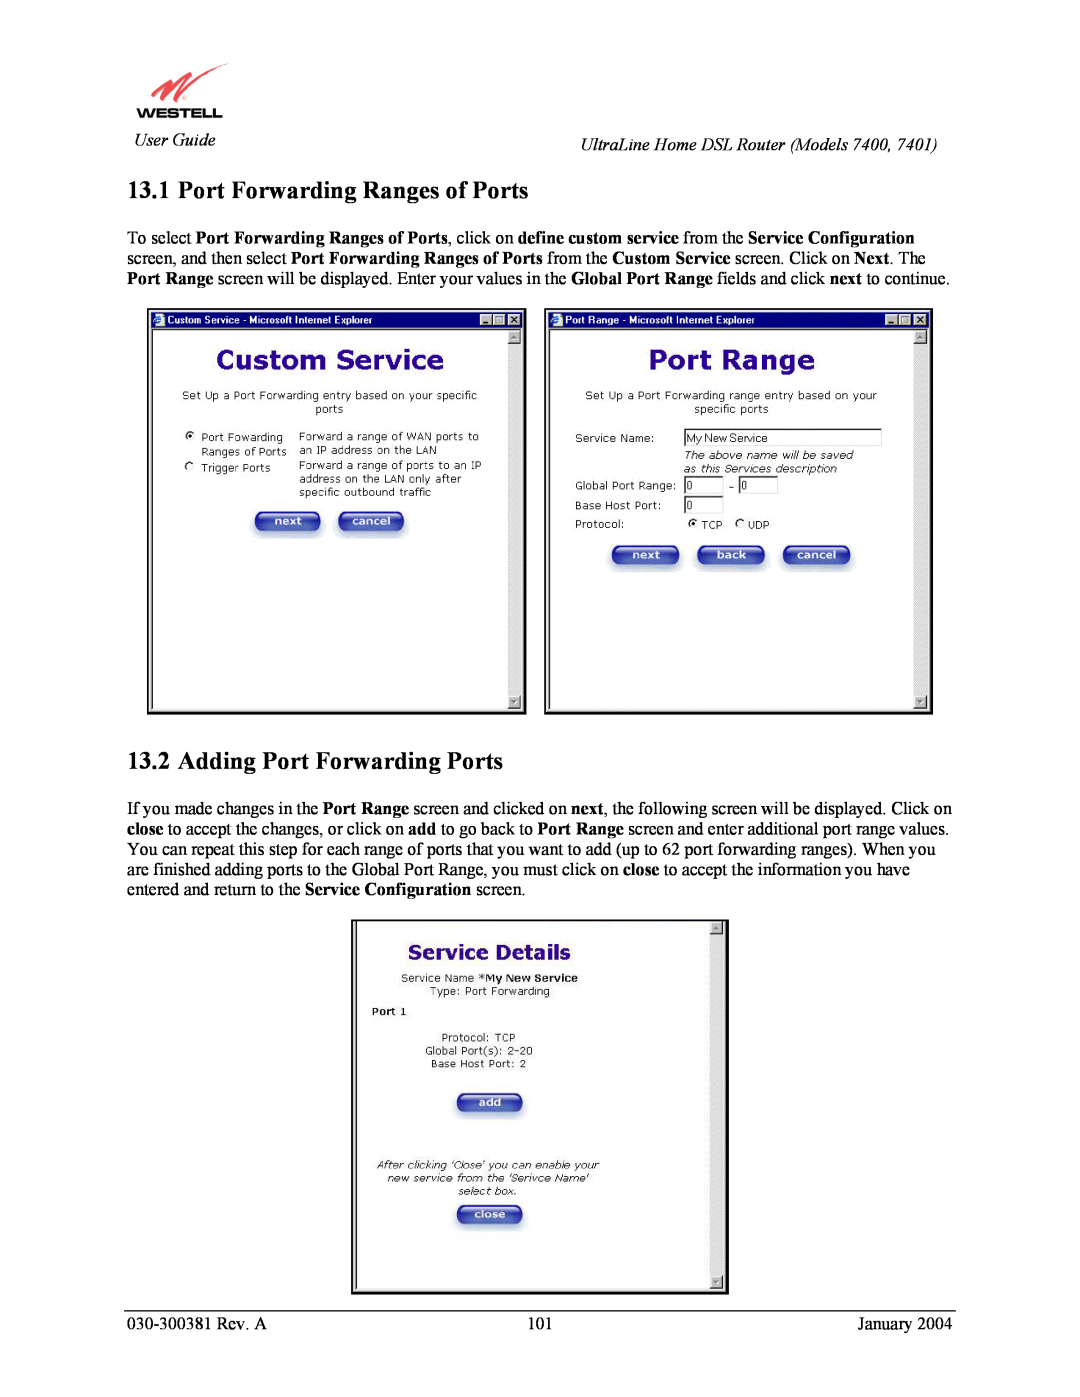 Westell Technologies 7400, 7401 manual Port Forwarding Ranges of Ports, Adding Port Forwarding Ports 